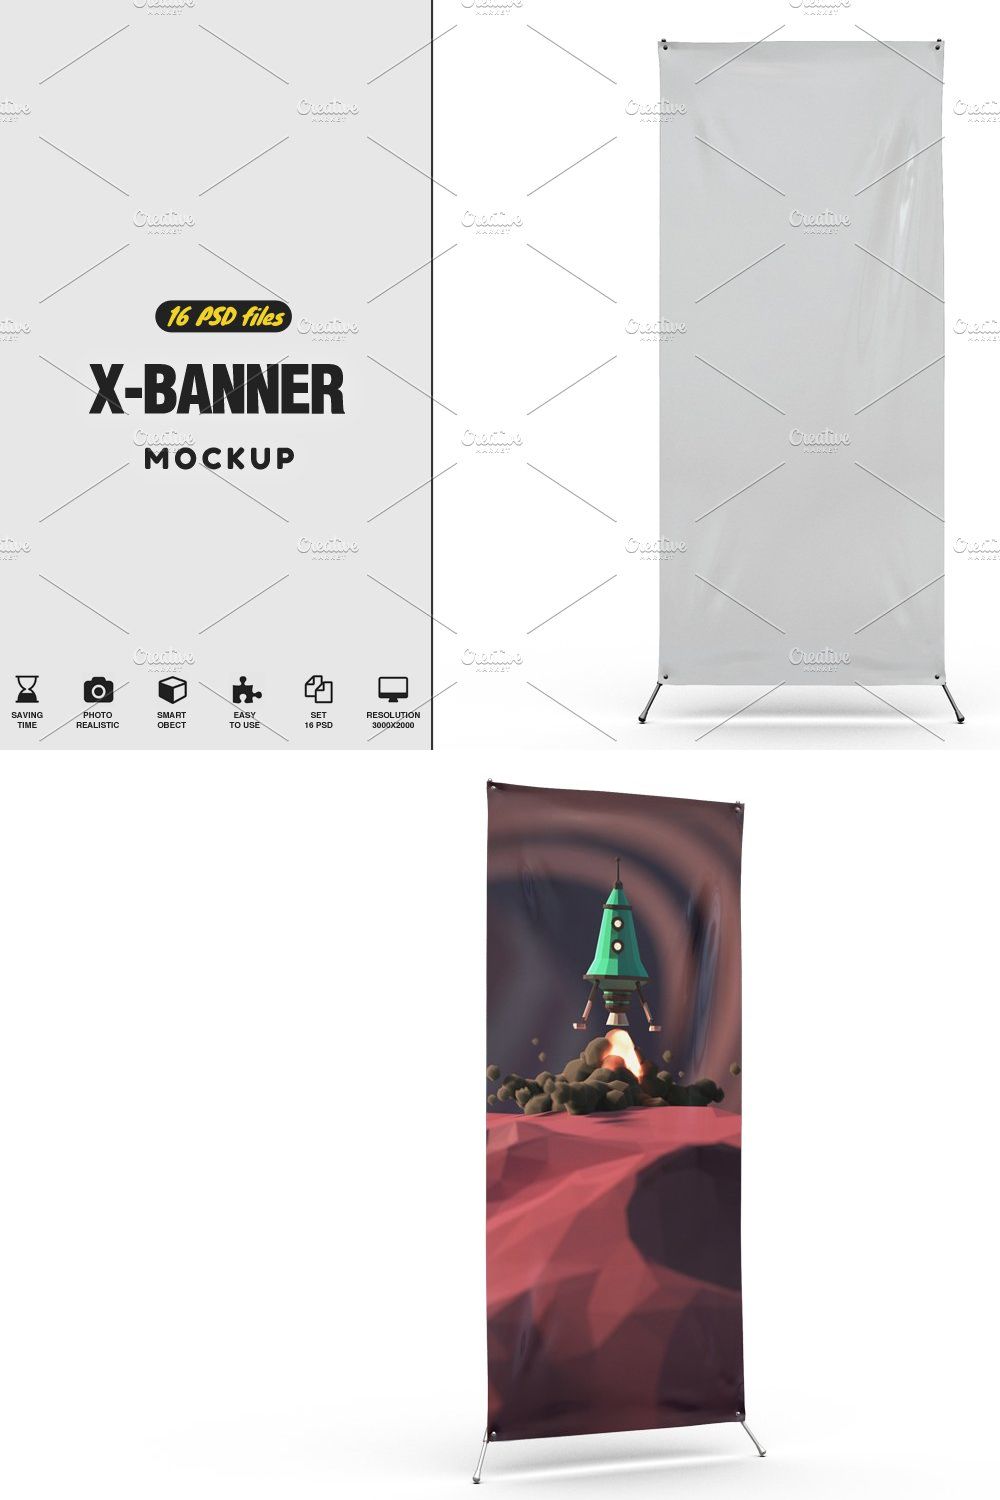 X-Banner MockUp pinterest preview image.